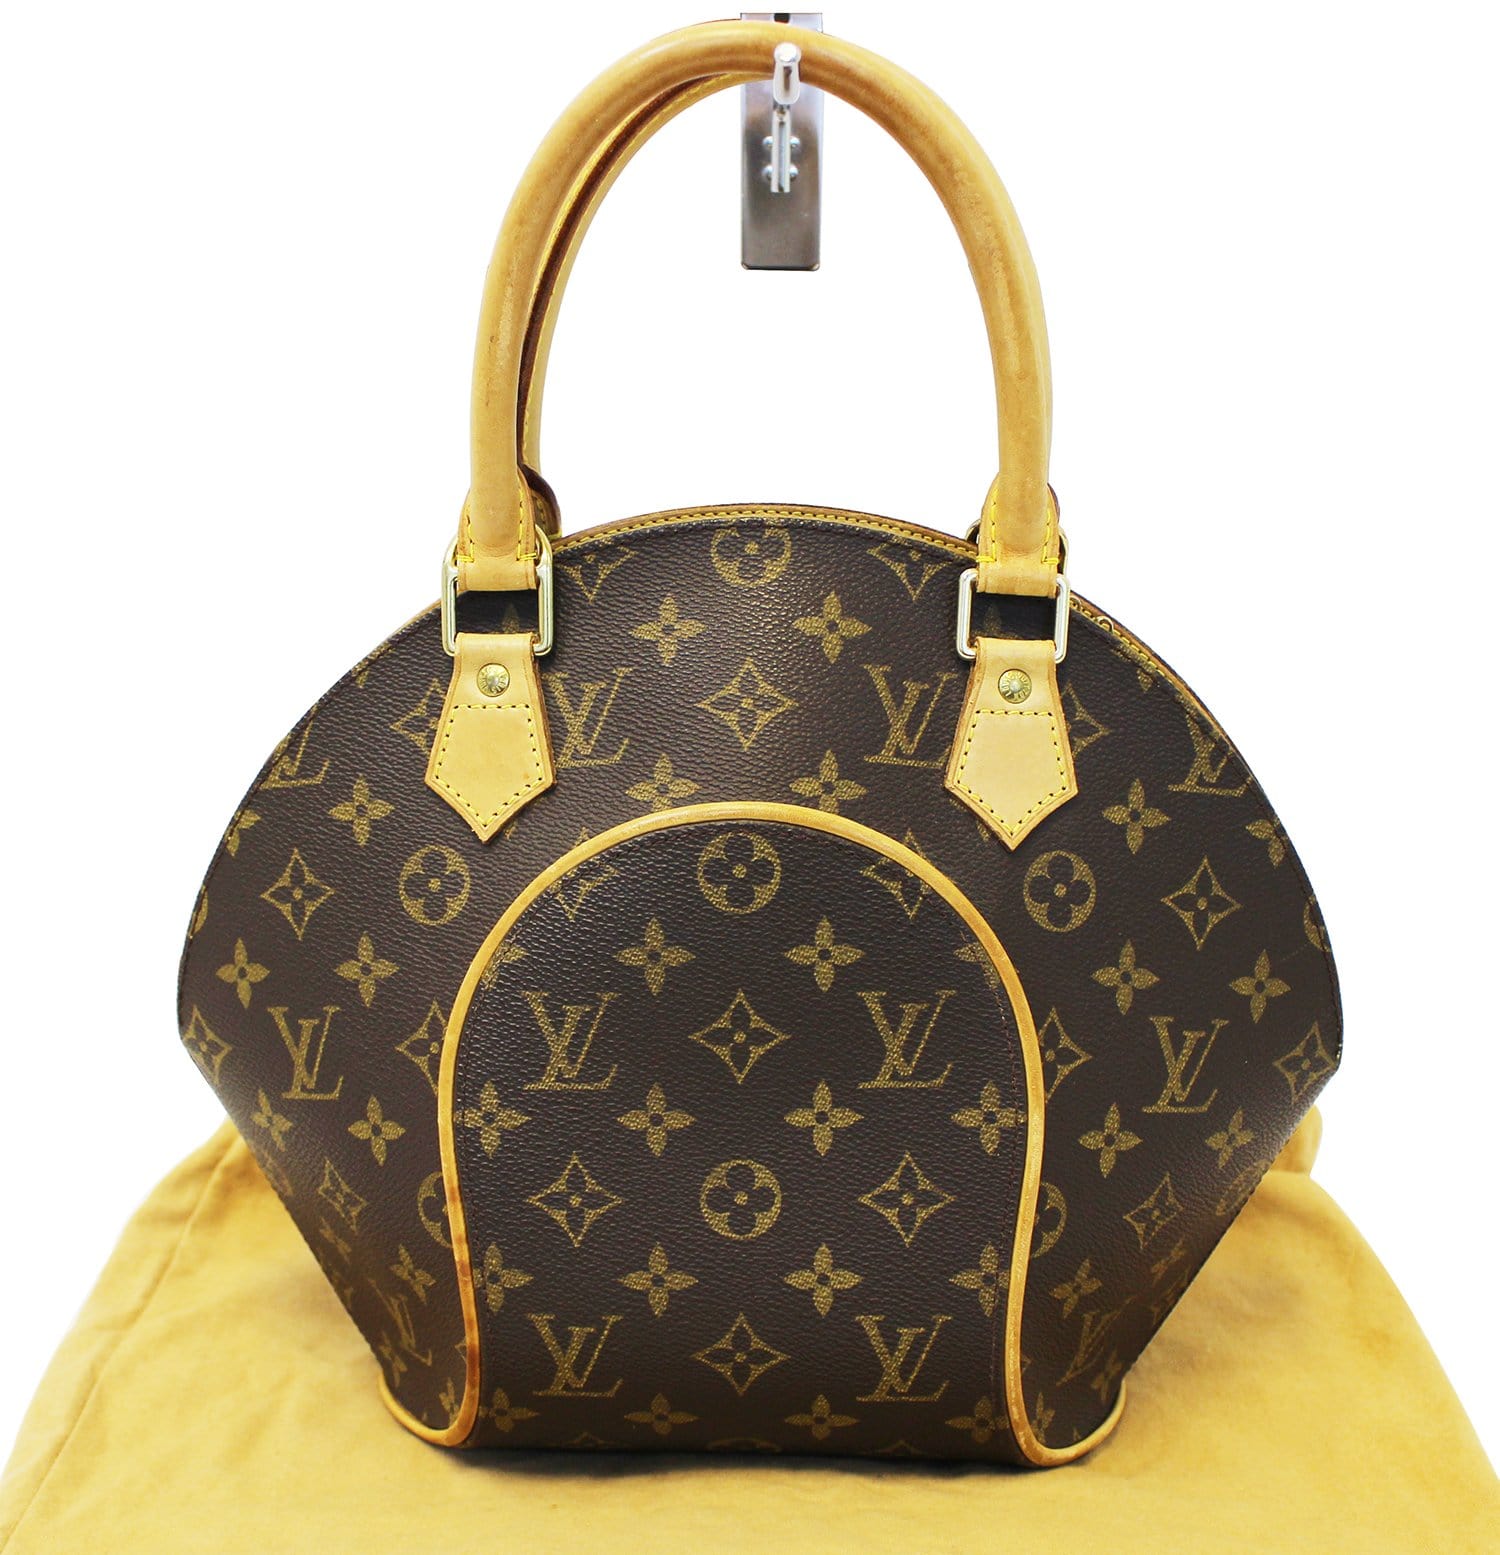 Authentic Louis Vuitton Ellipse PM Monogram Hand Bag MI0052 for Sale in  Houston, TX - OfferUp